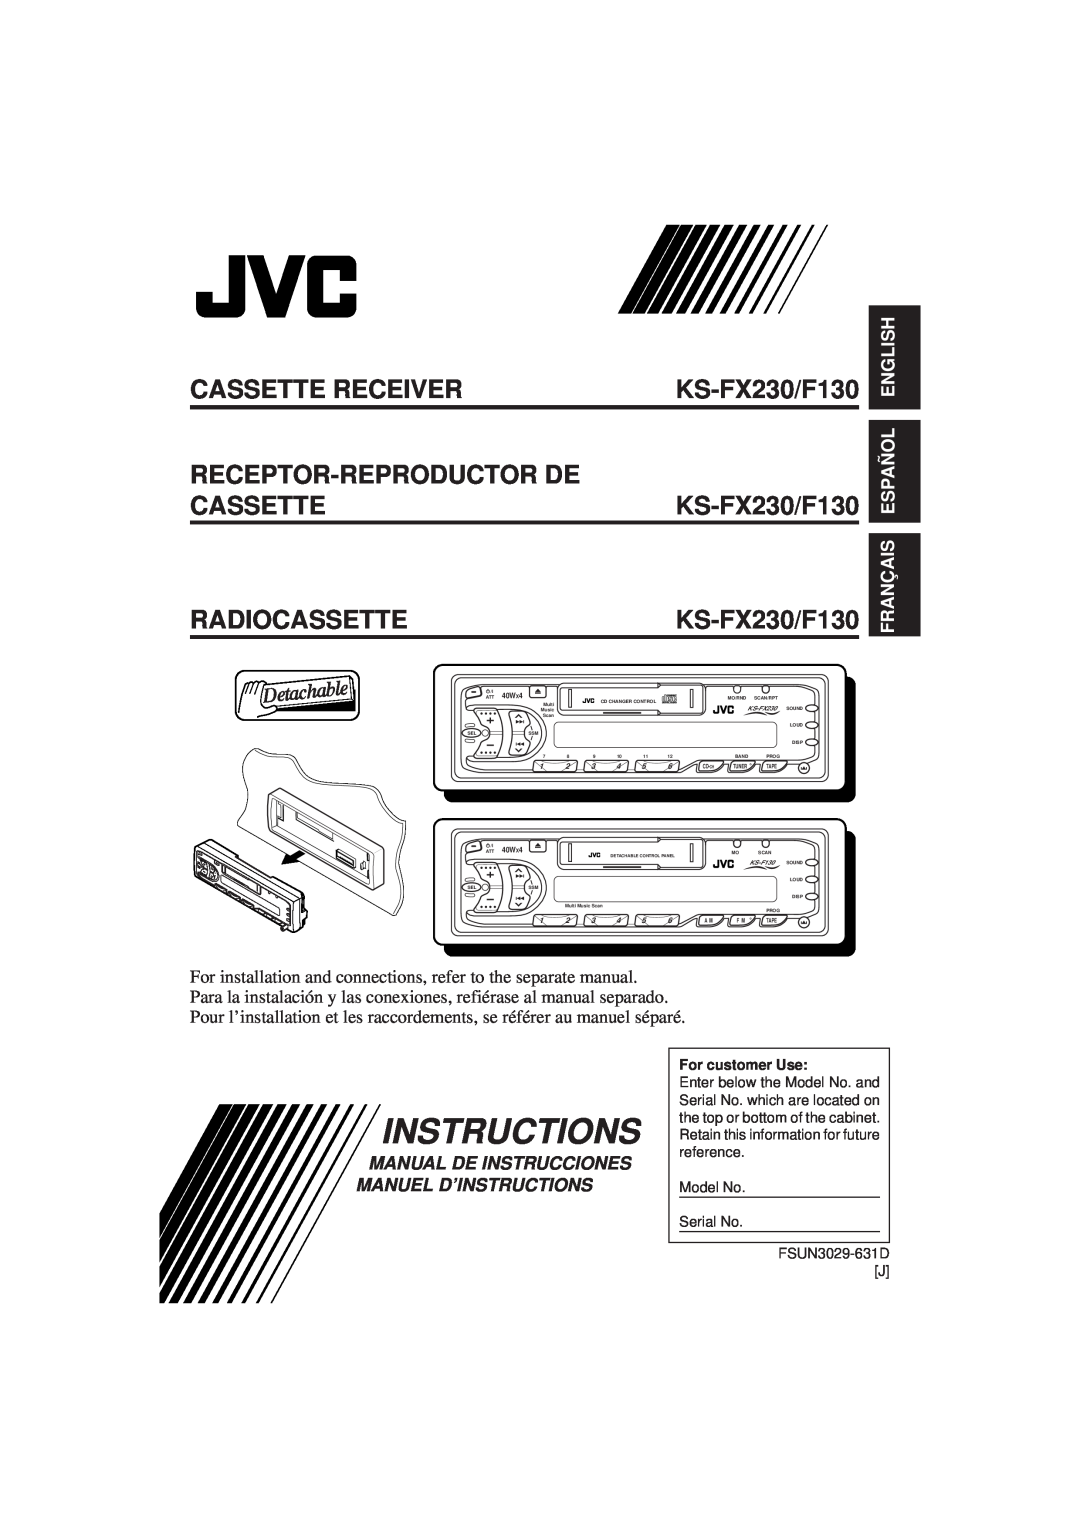 JVC F130 manual Instructions, Cassette Receiver Receptor-Reproductorde Cassette, Radiocassette, Français Español English 